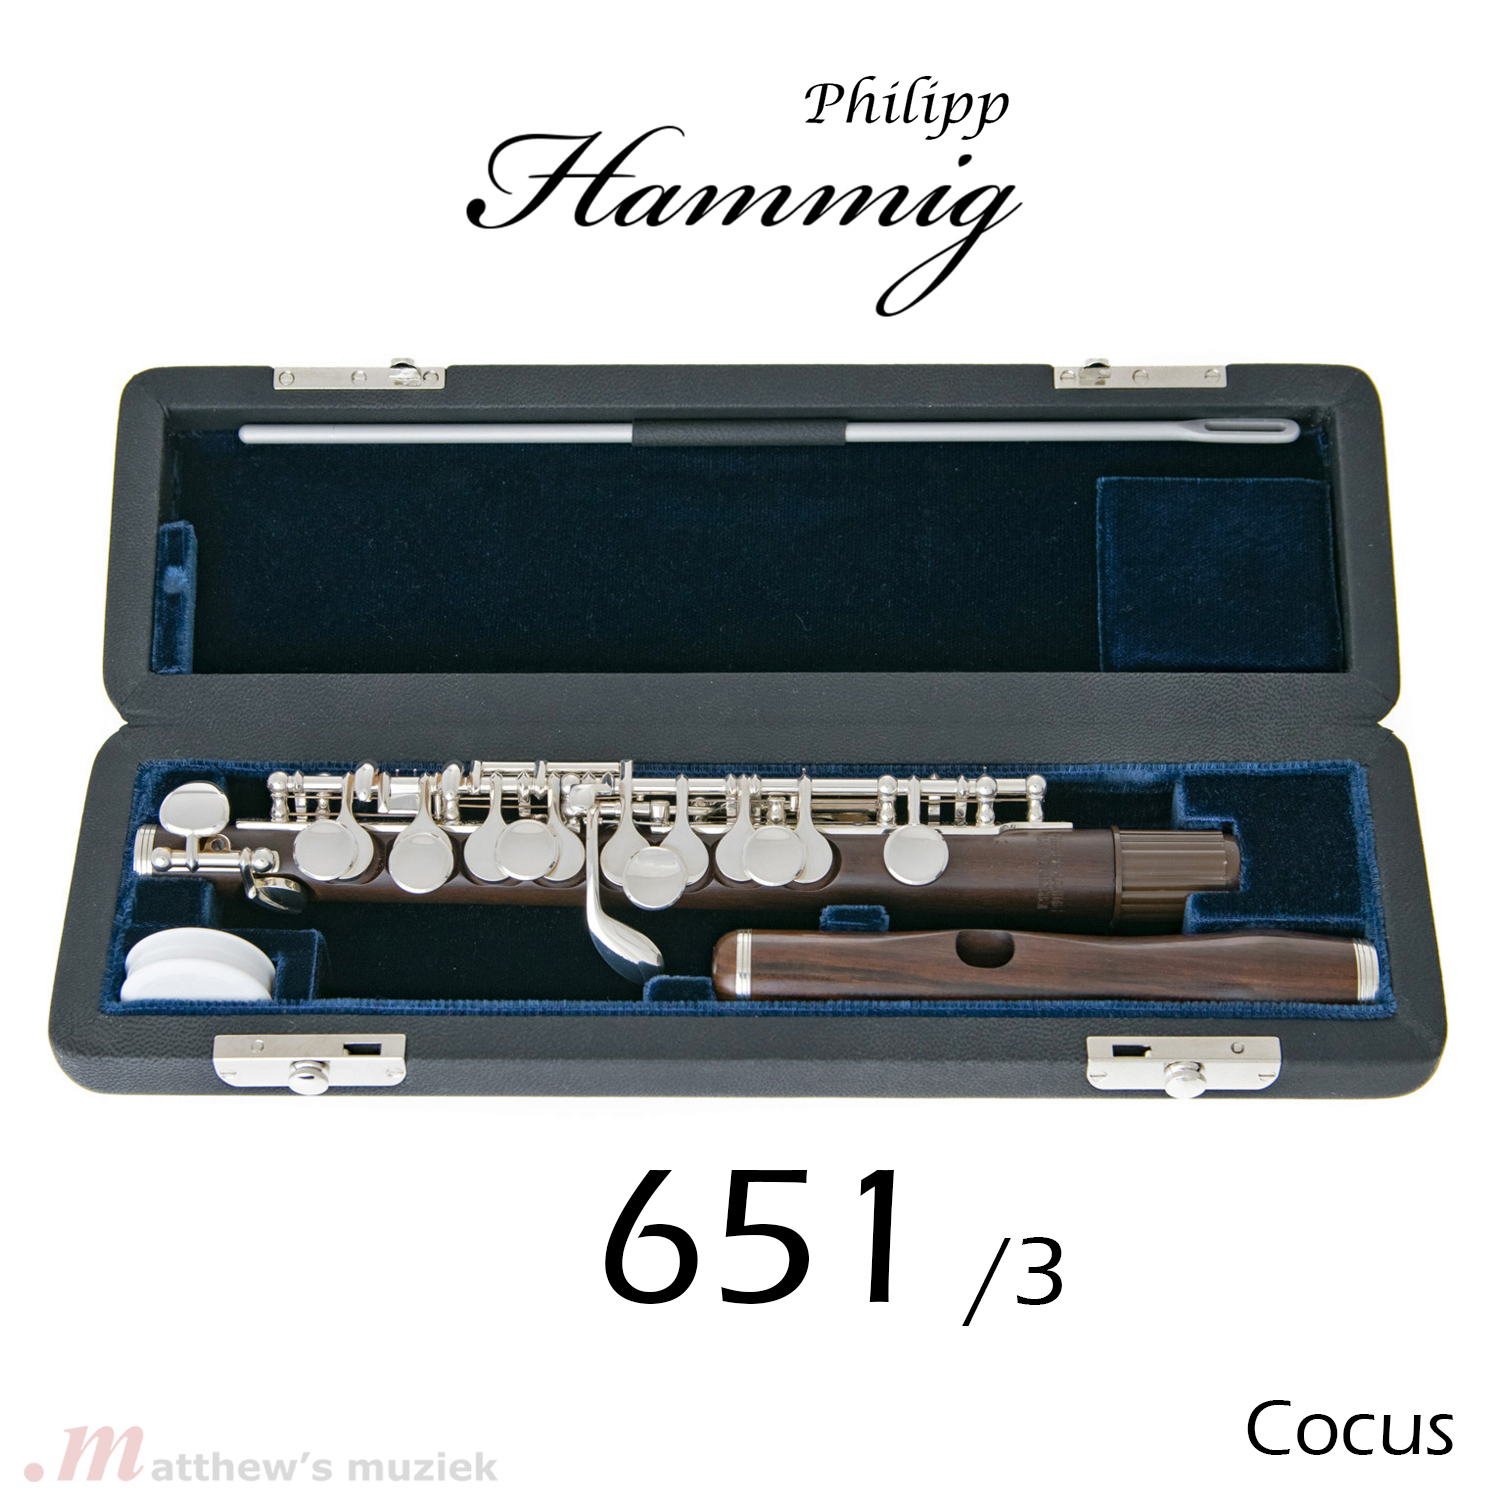 Philipp Hammig Piccolo - 651/3 Cocus